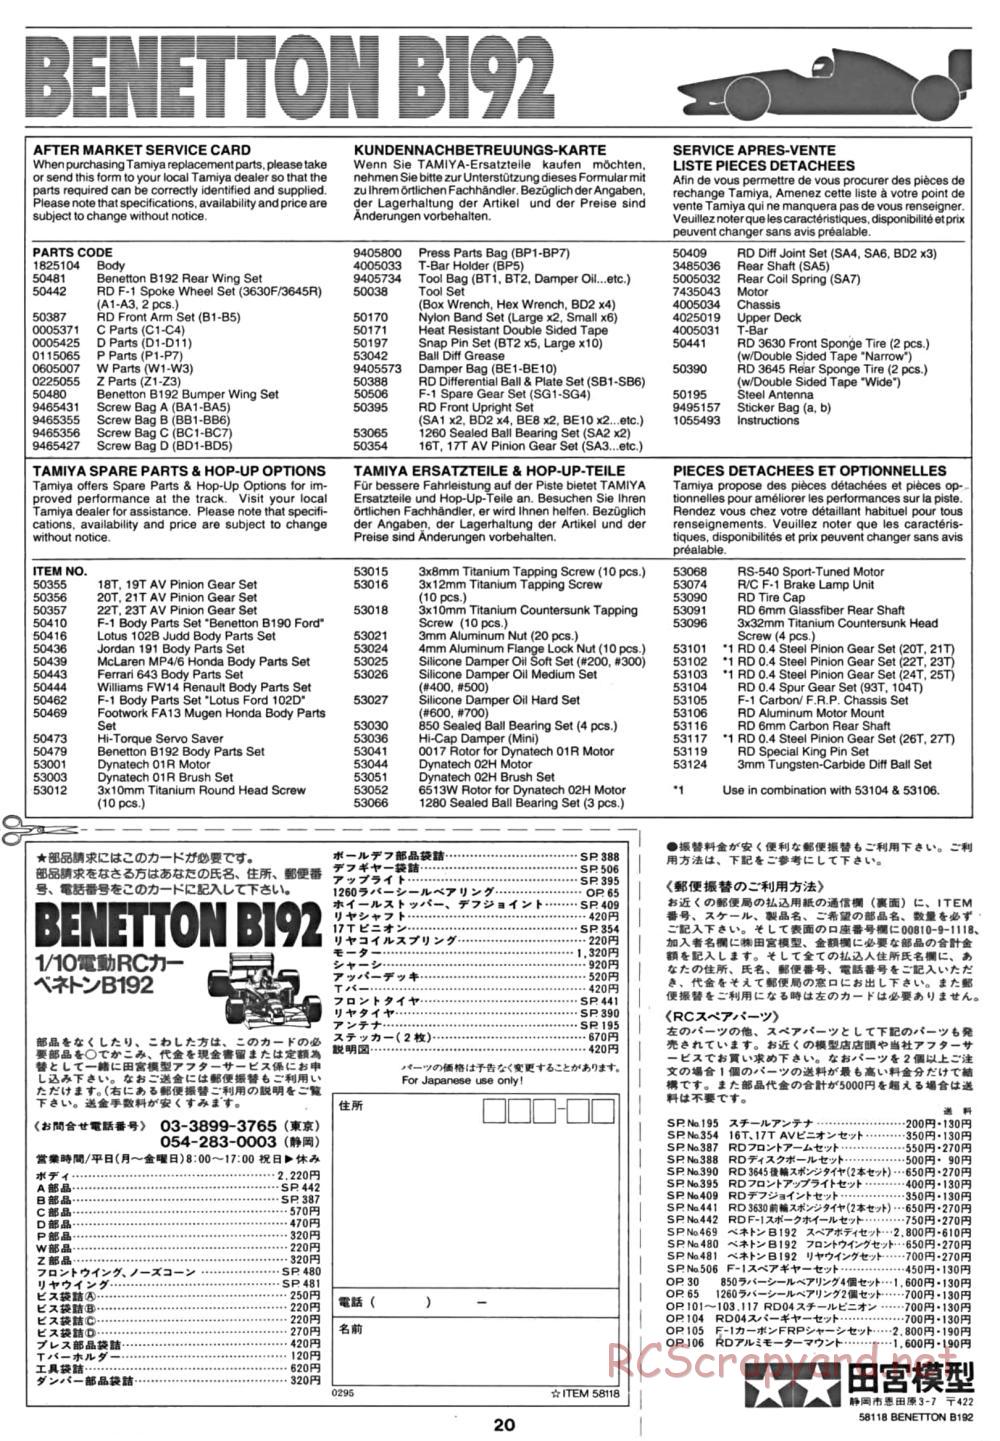 Tamiya - Benetton B192 - F102 Chassis - Manual - Page 20